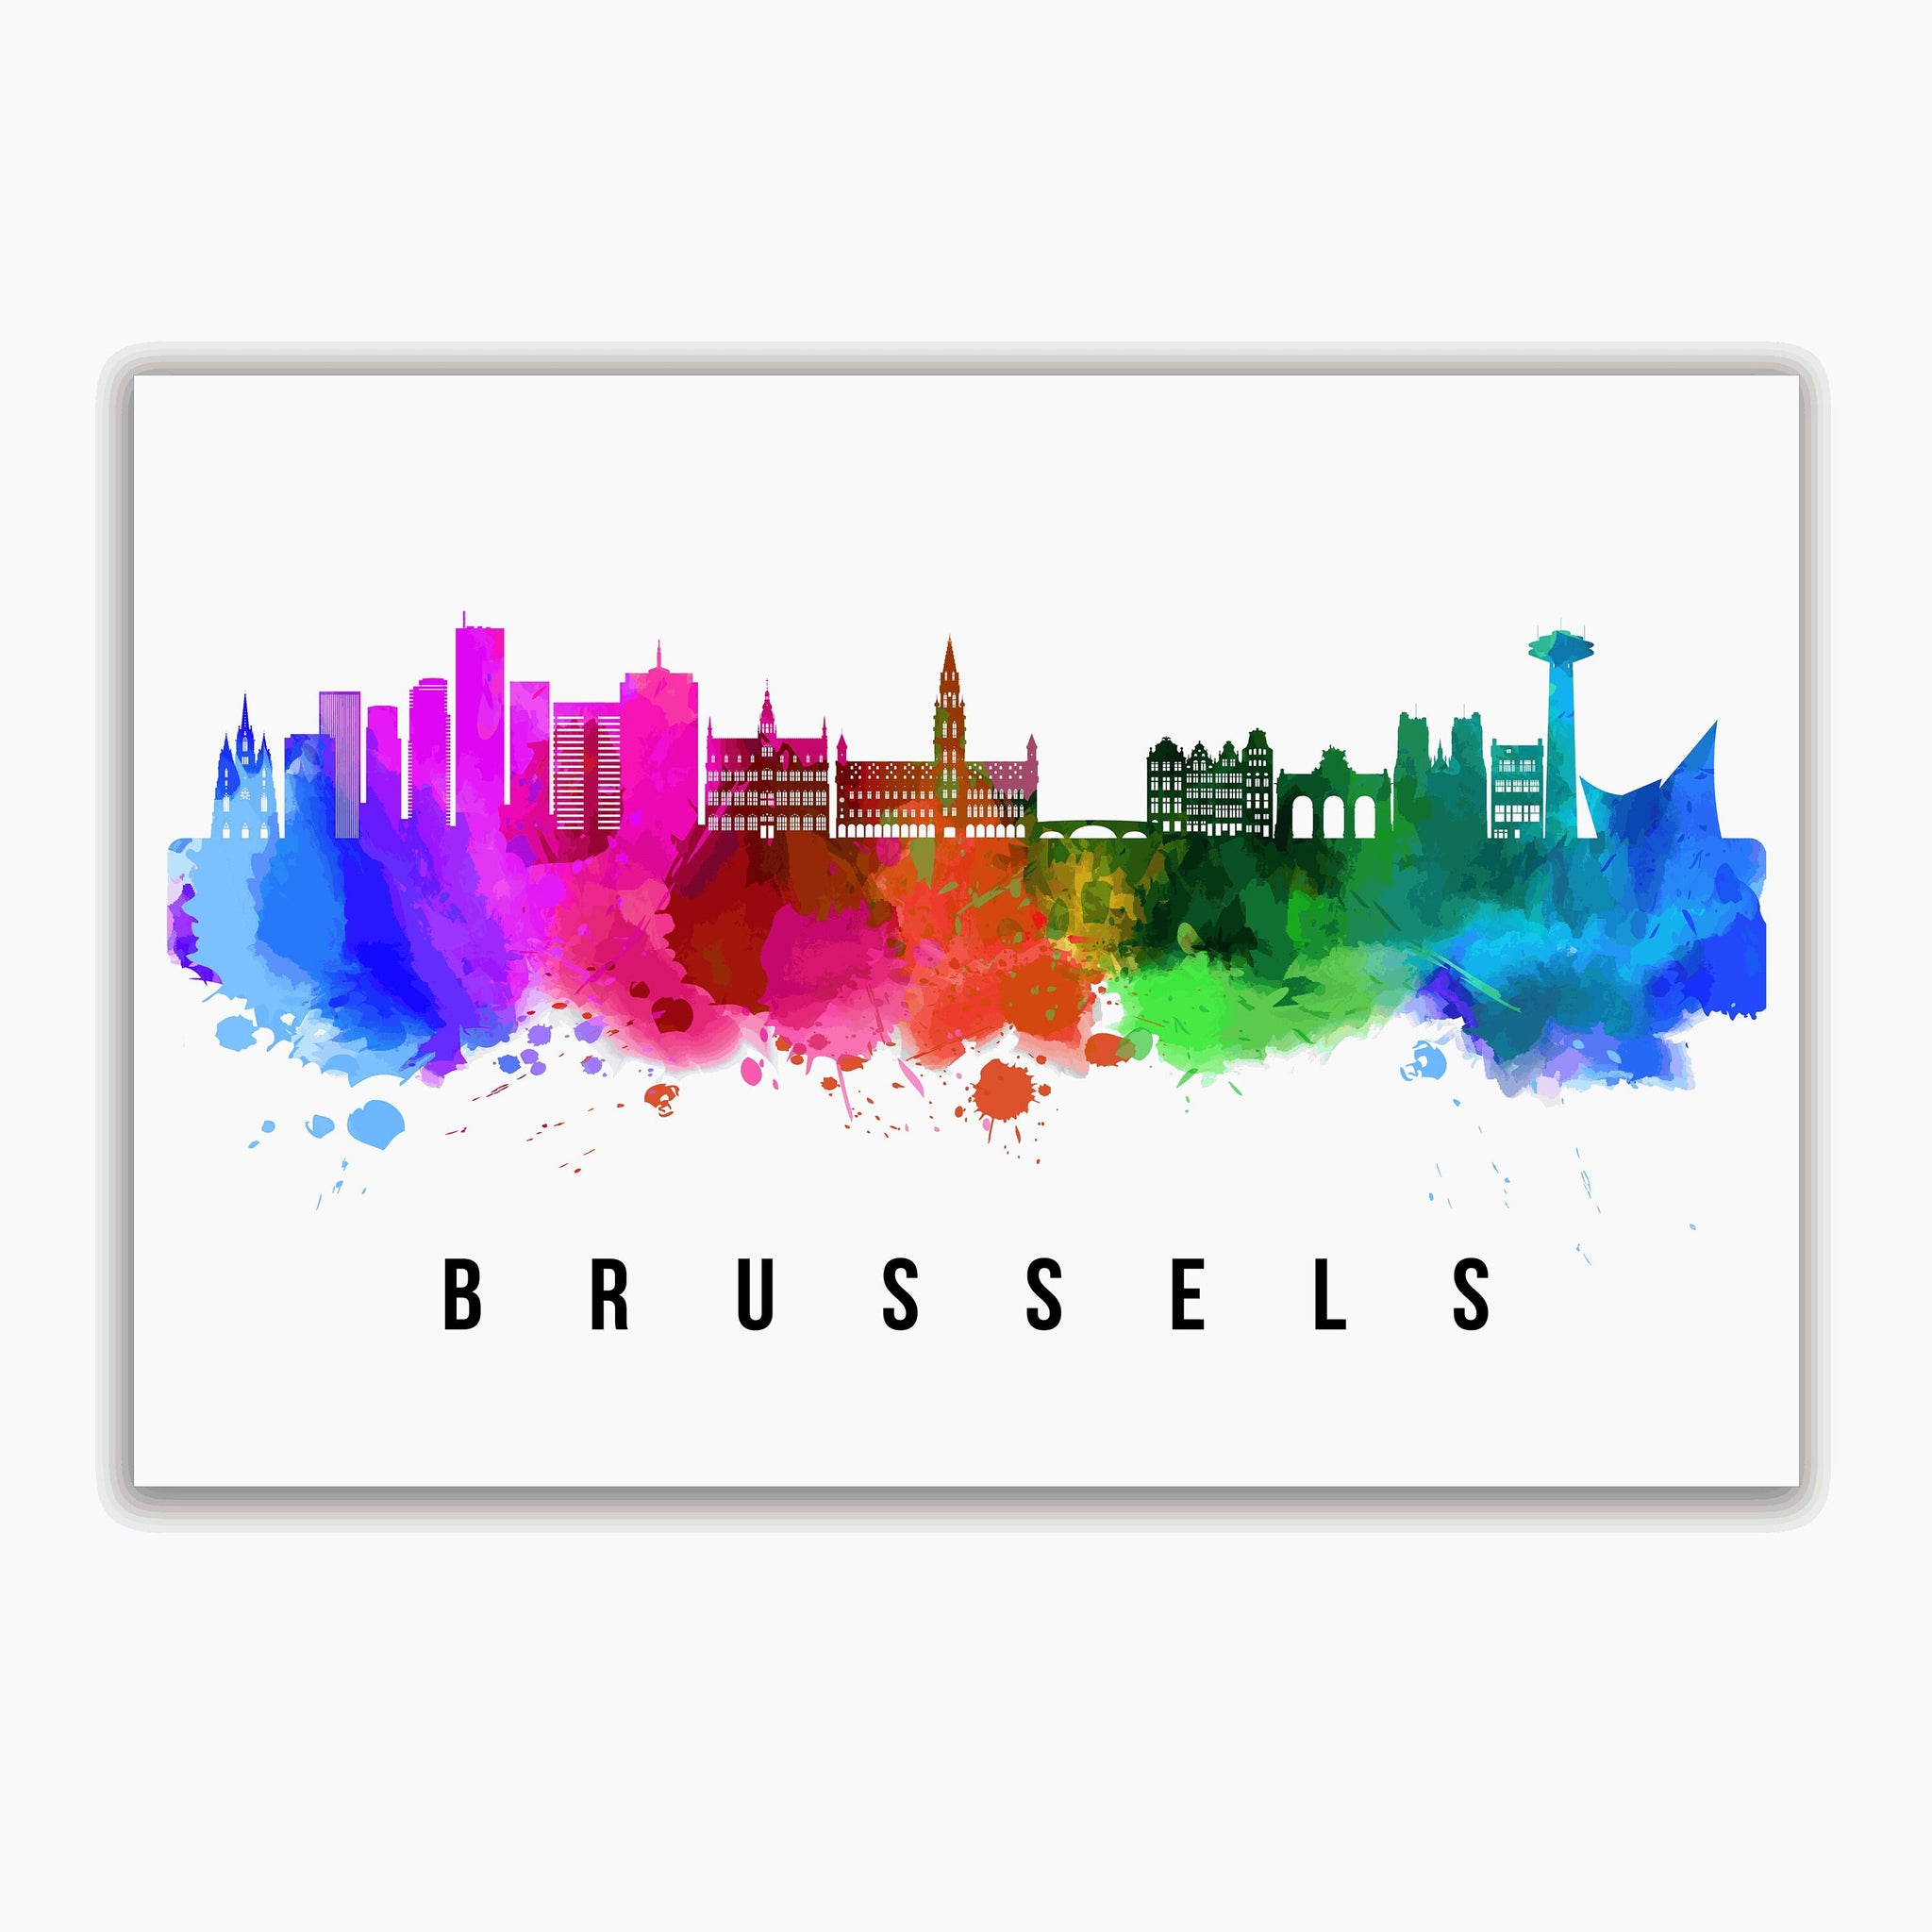 BRUSSELS - BELGIUM Poster,  Skyline Poster Cityscape and Landmark Bordeaux Illustration Home Wall Art, Office Decor